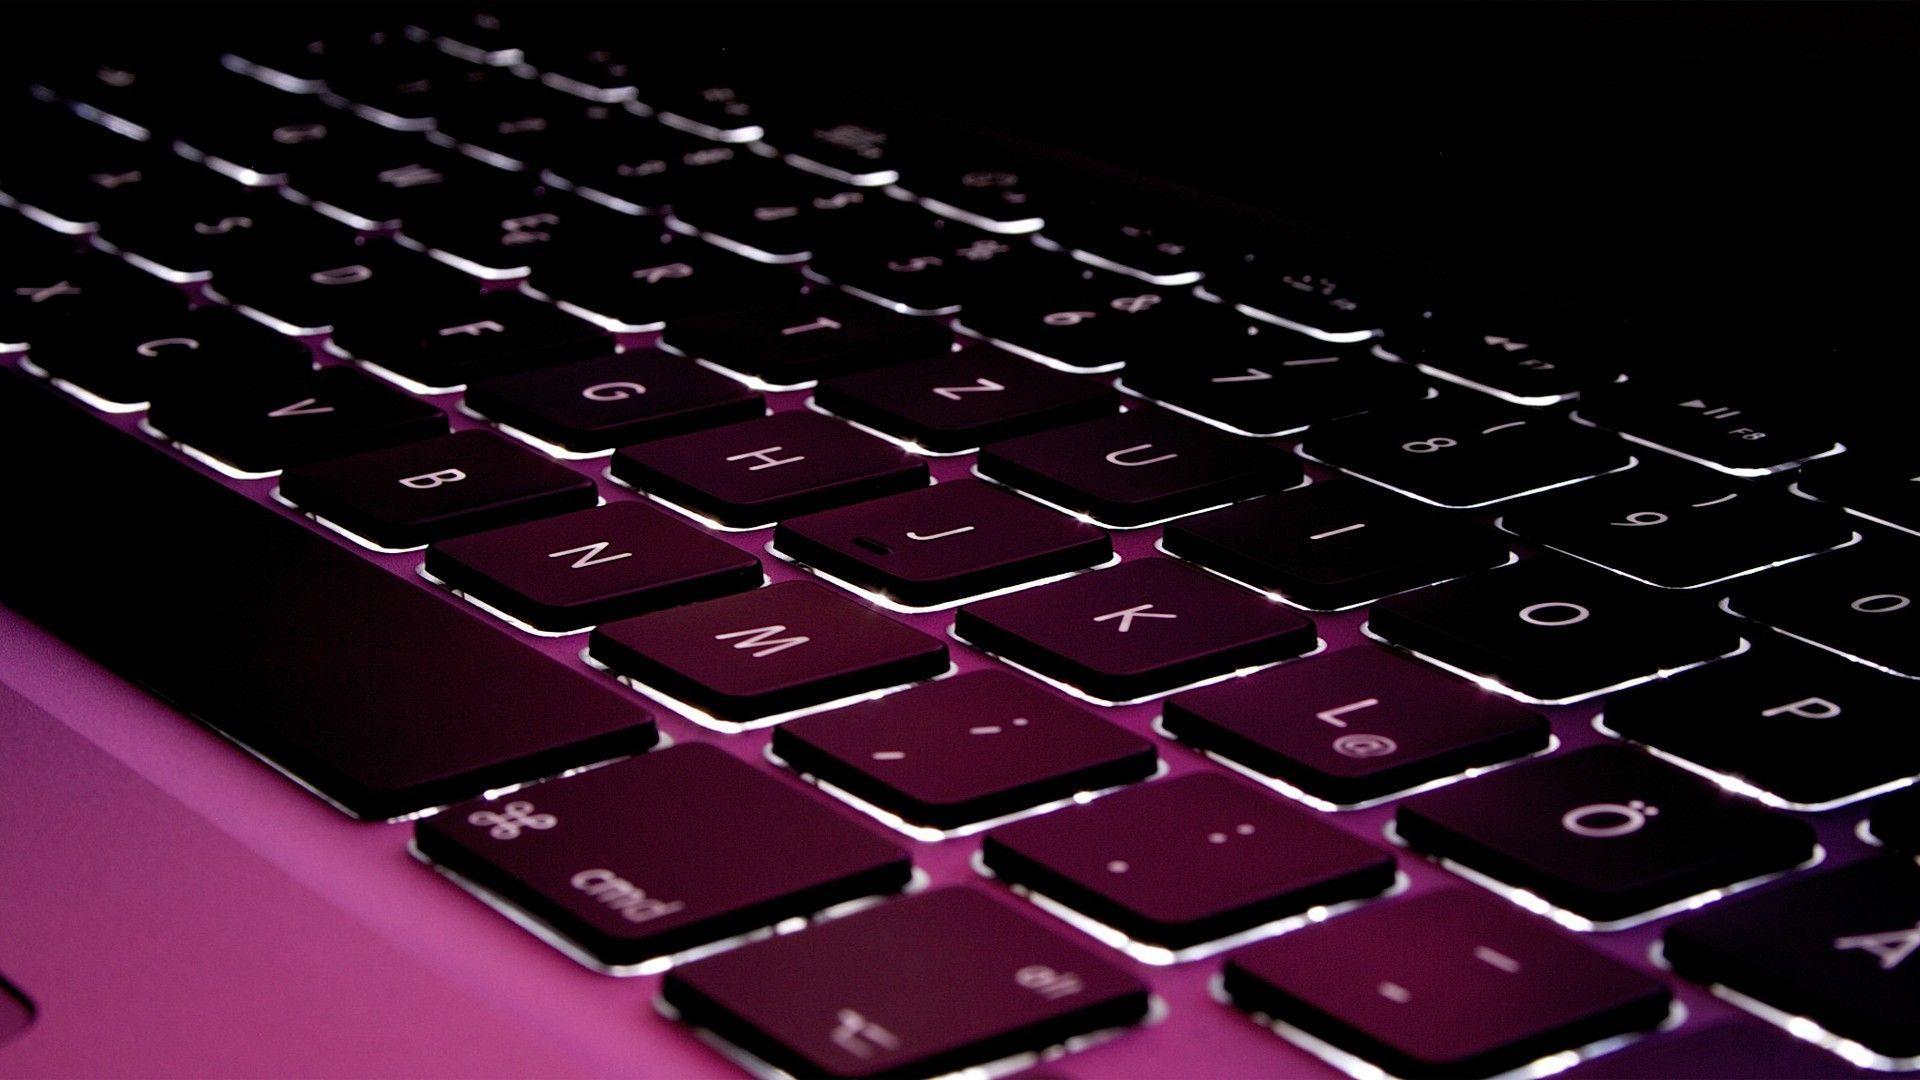 MacBook Pro purple colored keyboard HD Wallpaper FullHDWpp